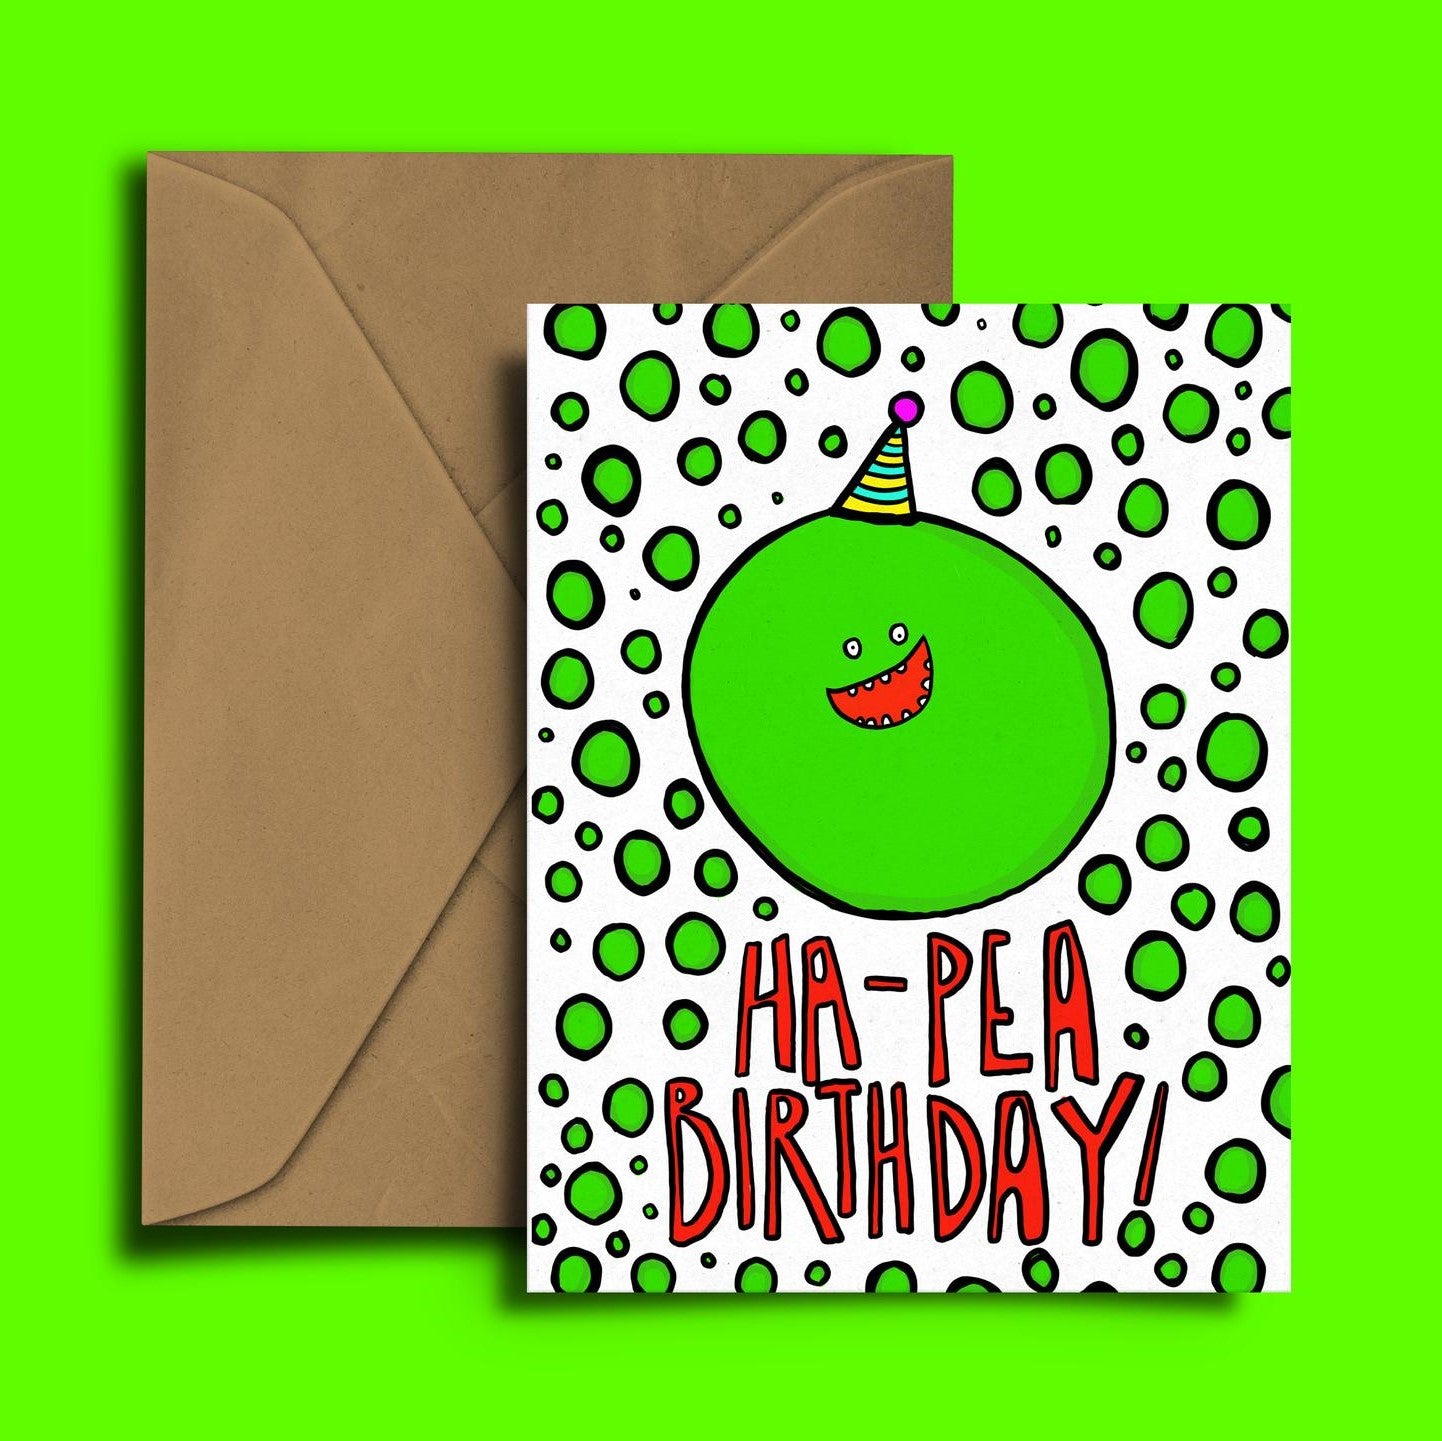 Hap Pea Birthday Card